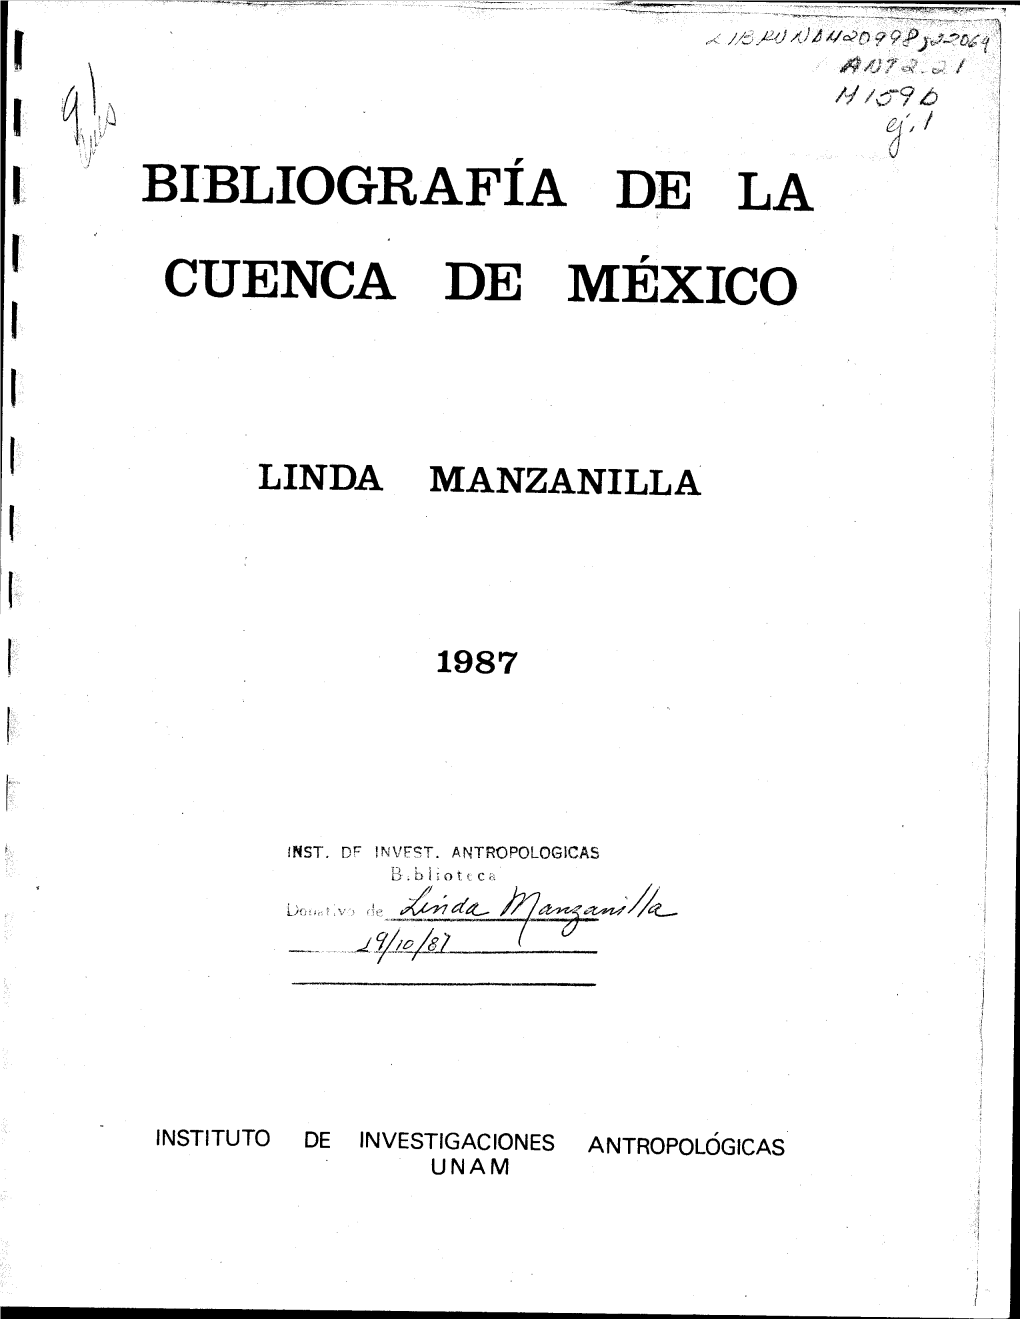 Bi·Bliografia De La Cuenca De Mexico